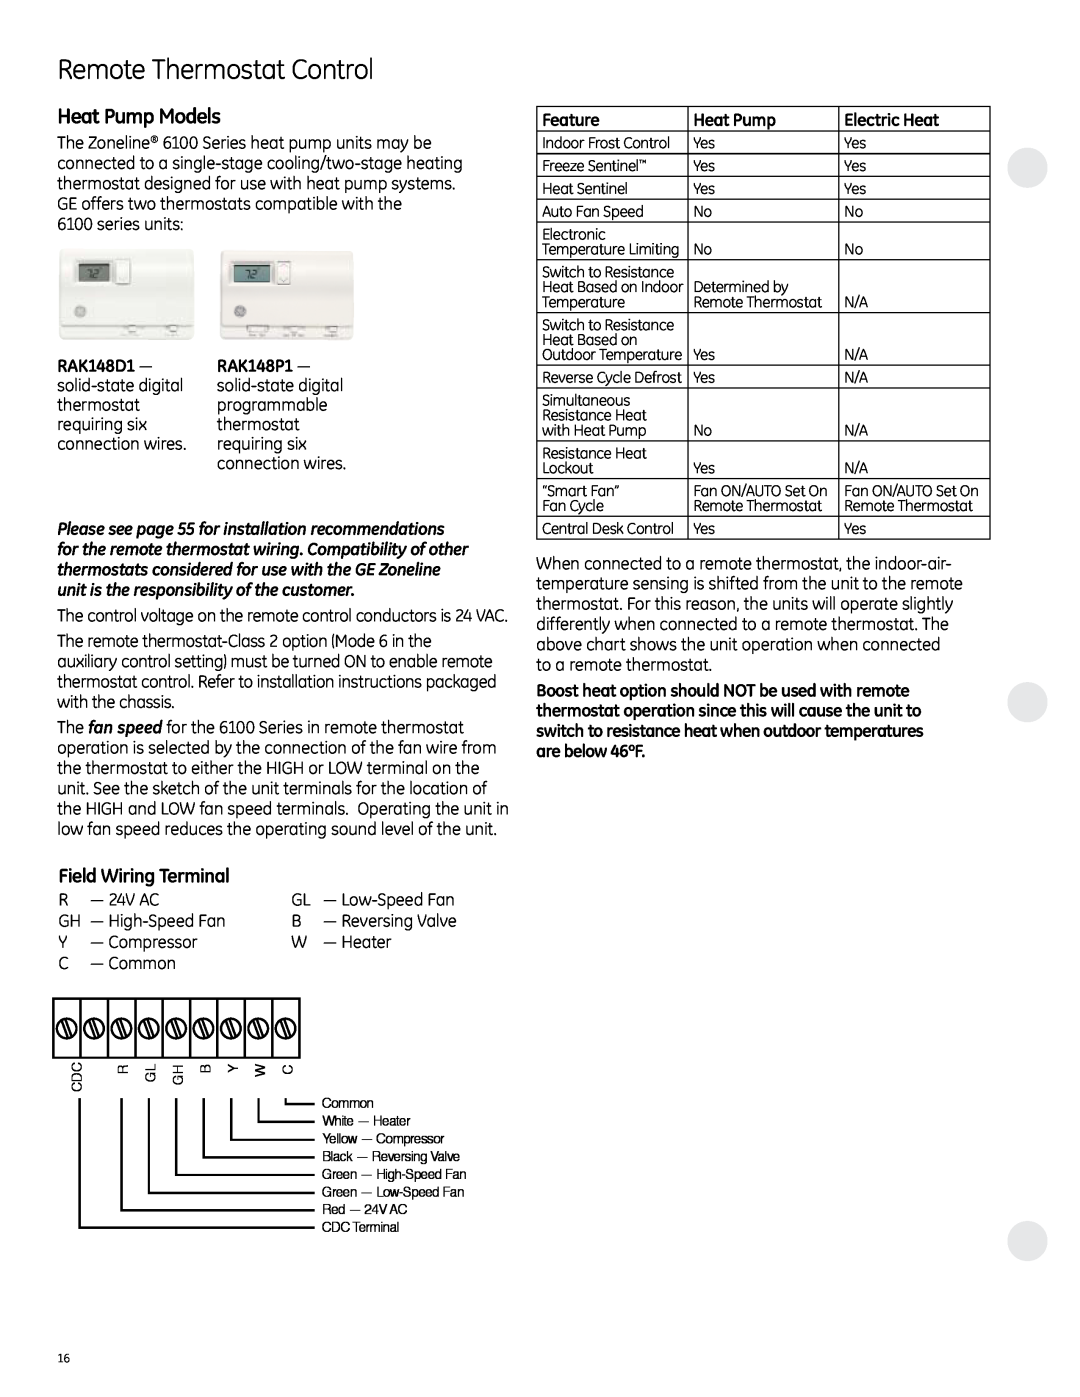 GE 6100 Heat Pump Models, Remote Thermostat Control, Field Wiring Terminal, RAK148D1, RAK148P1, Feature, Electric Heat 